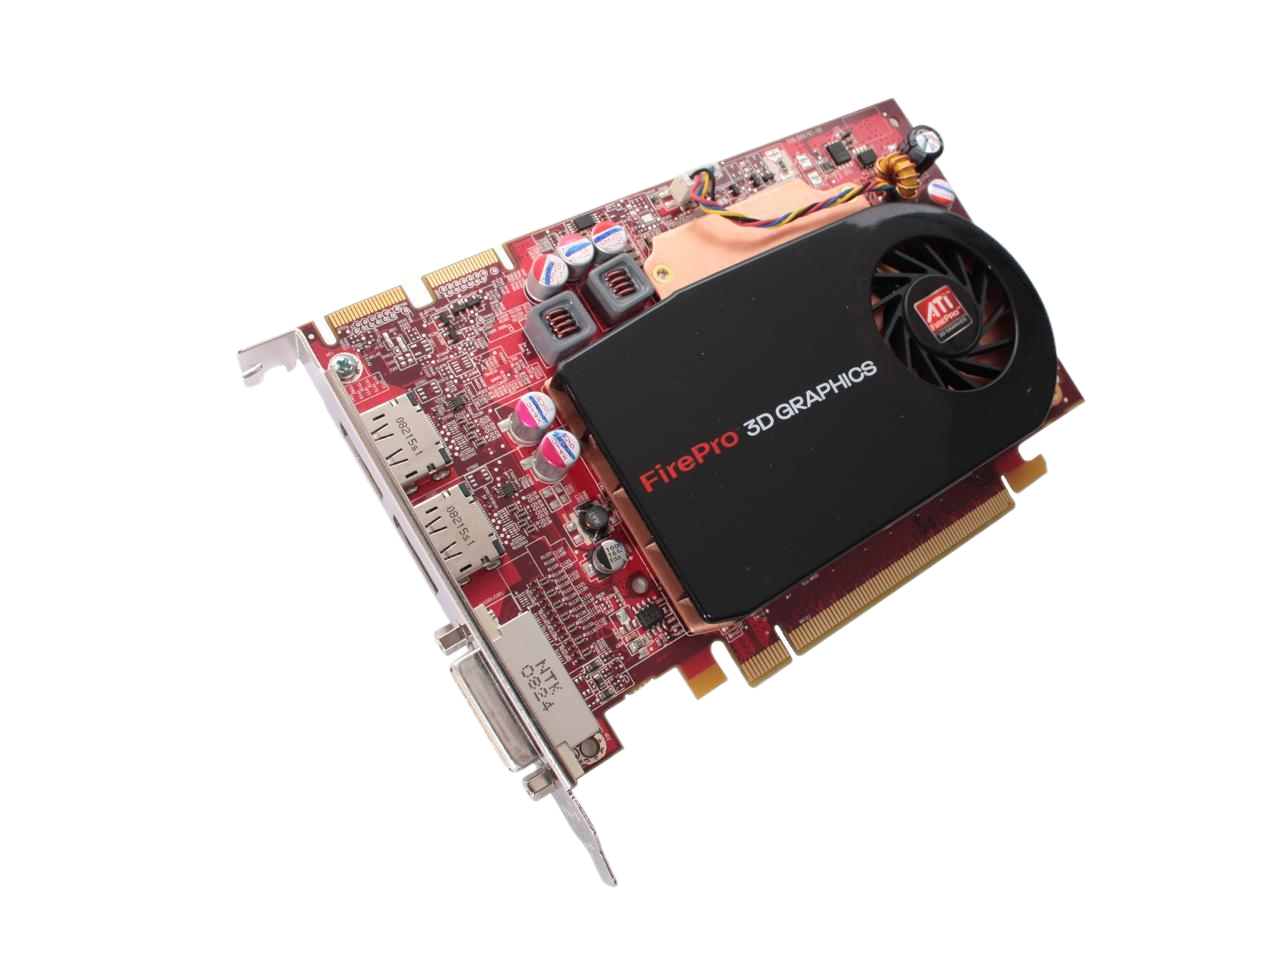 AMD ATI FirePro V5700 100-505553 512MB PCI Express 2.0 x16 Workstation Video Card